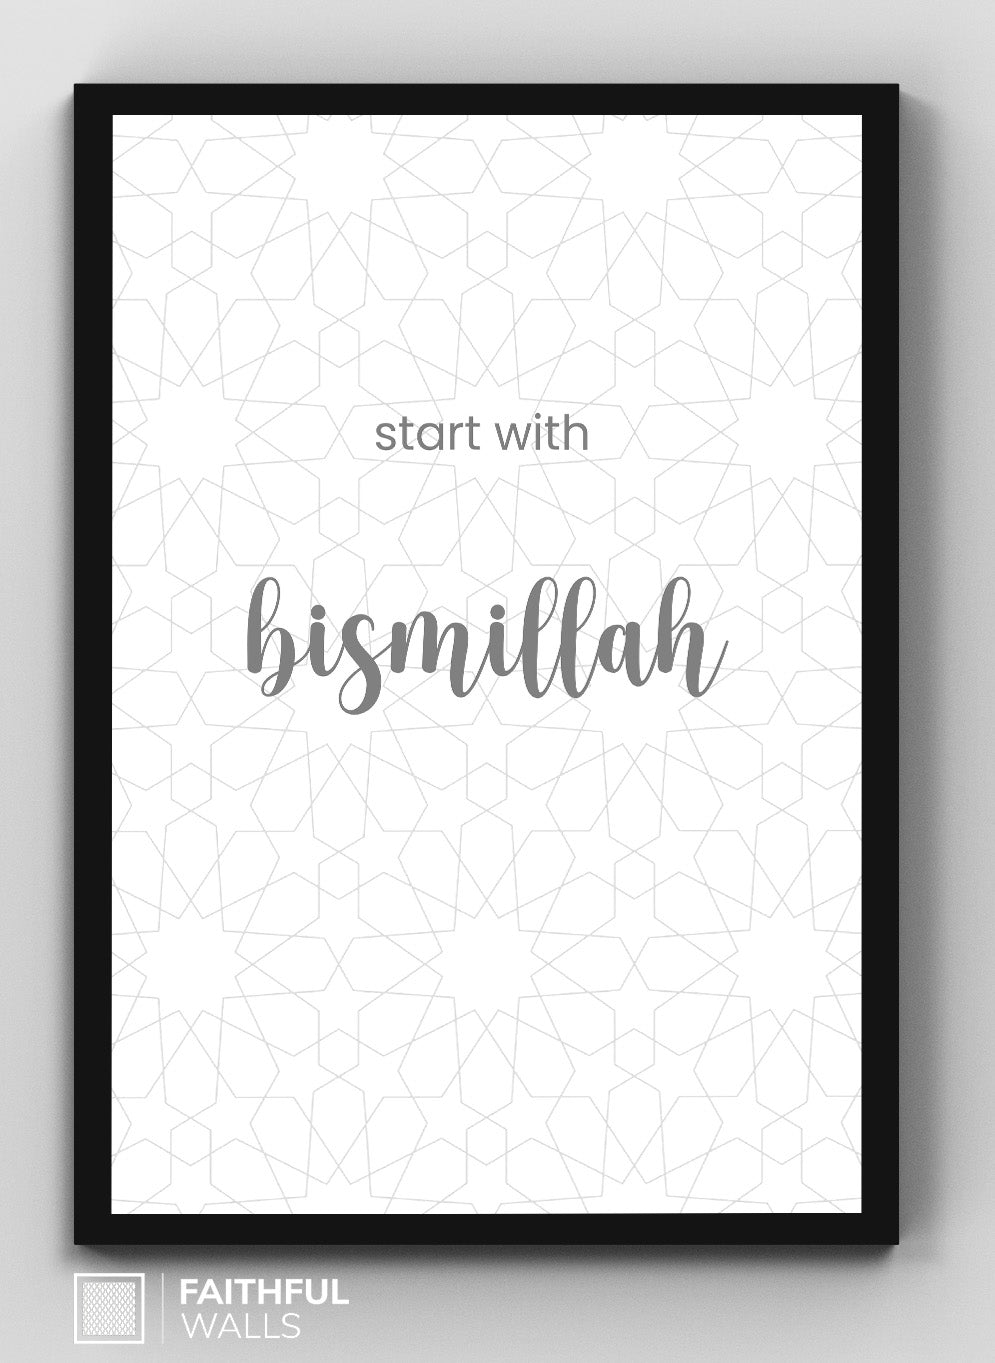 Bismillah - in sha Allah - AlHamdulillah